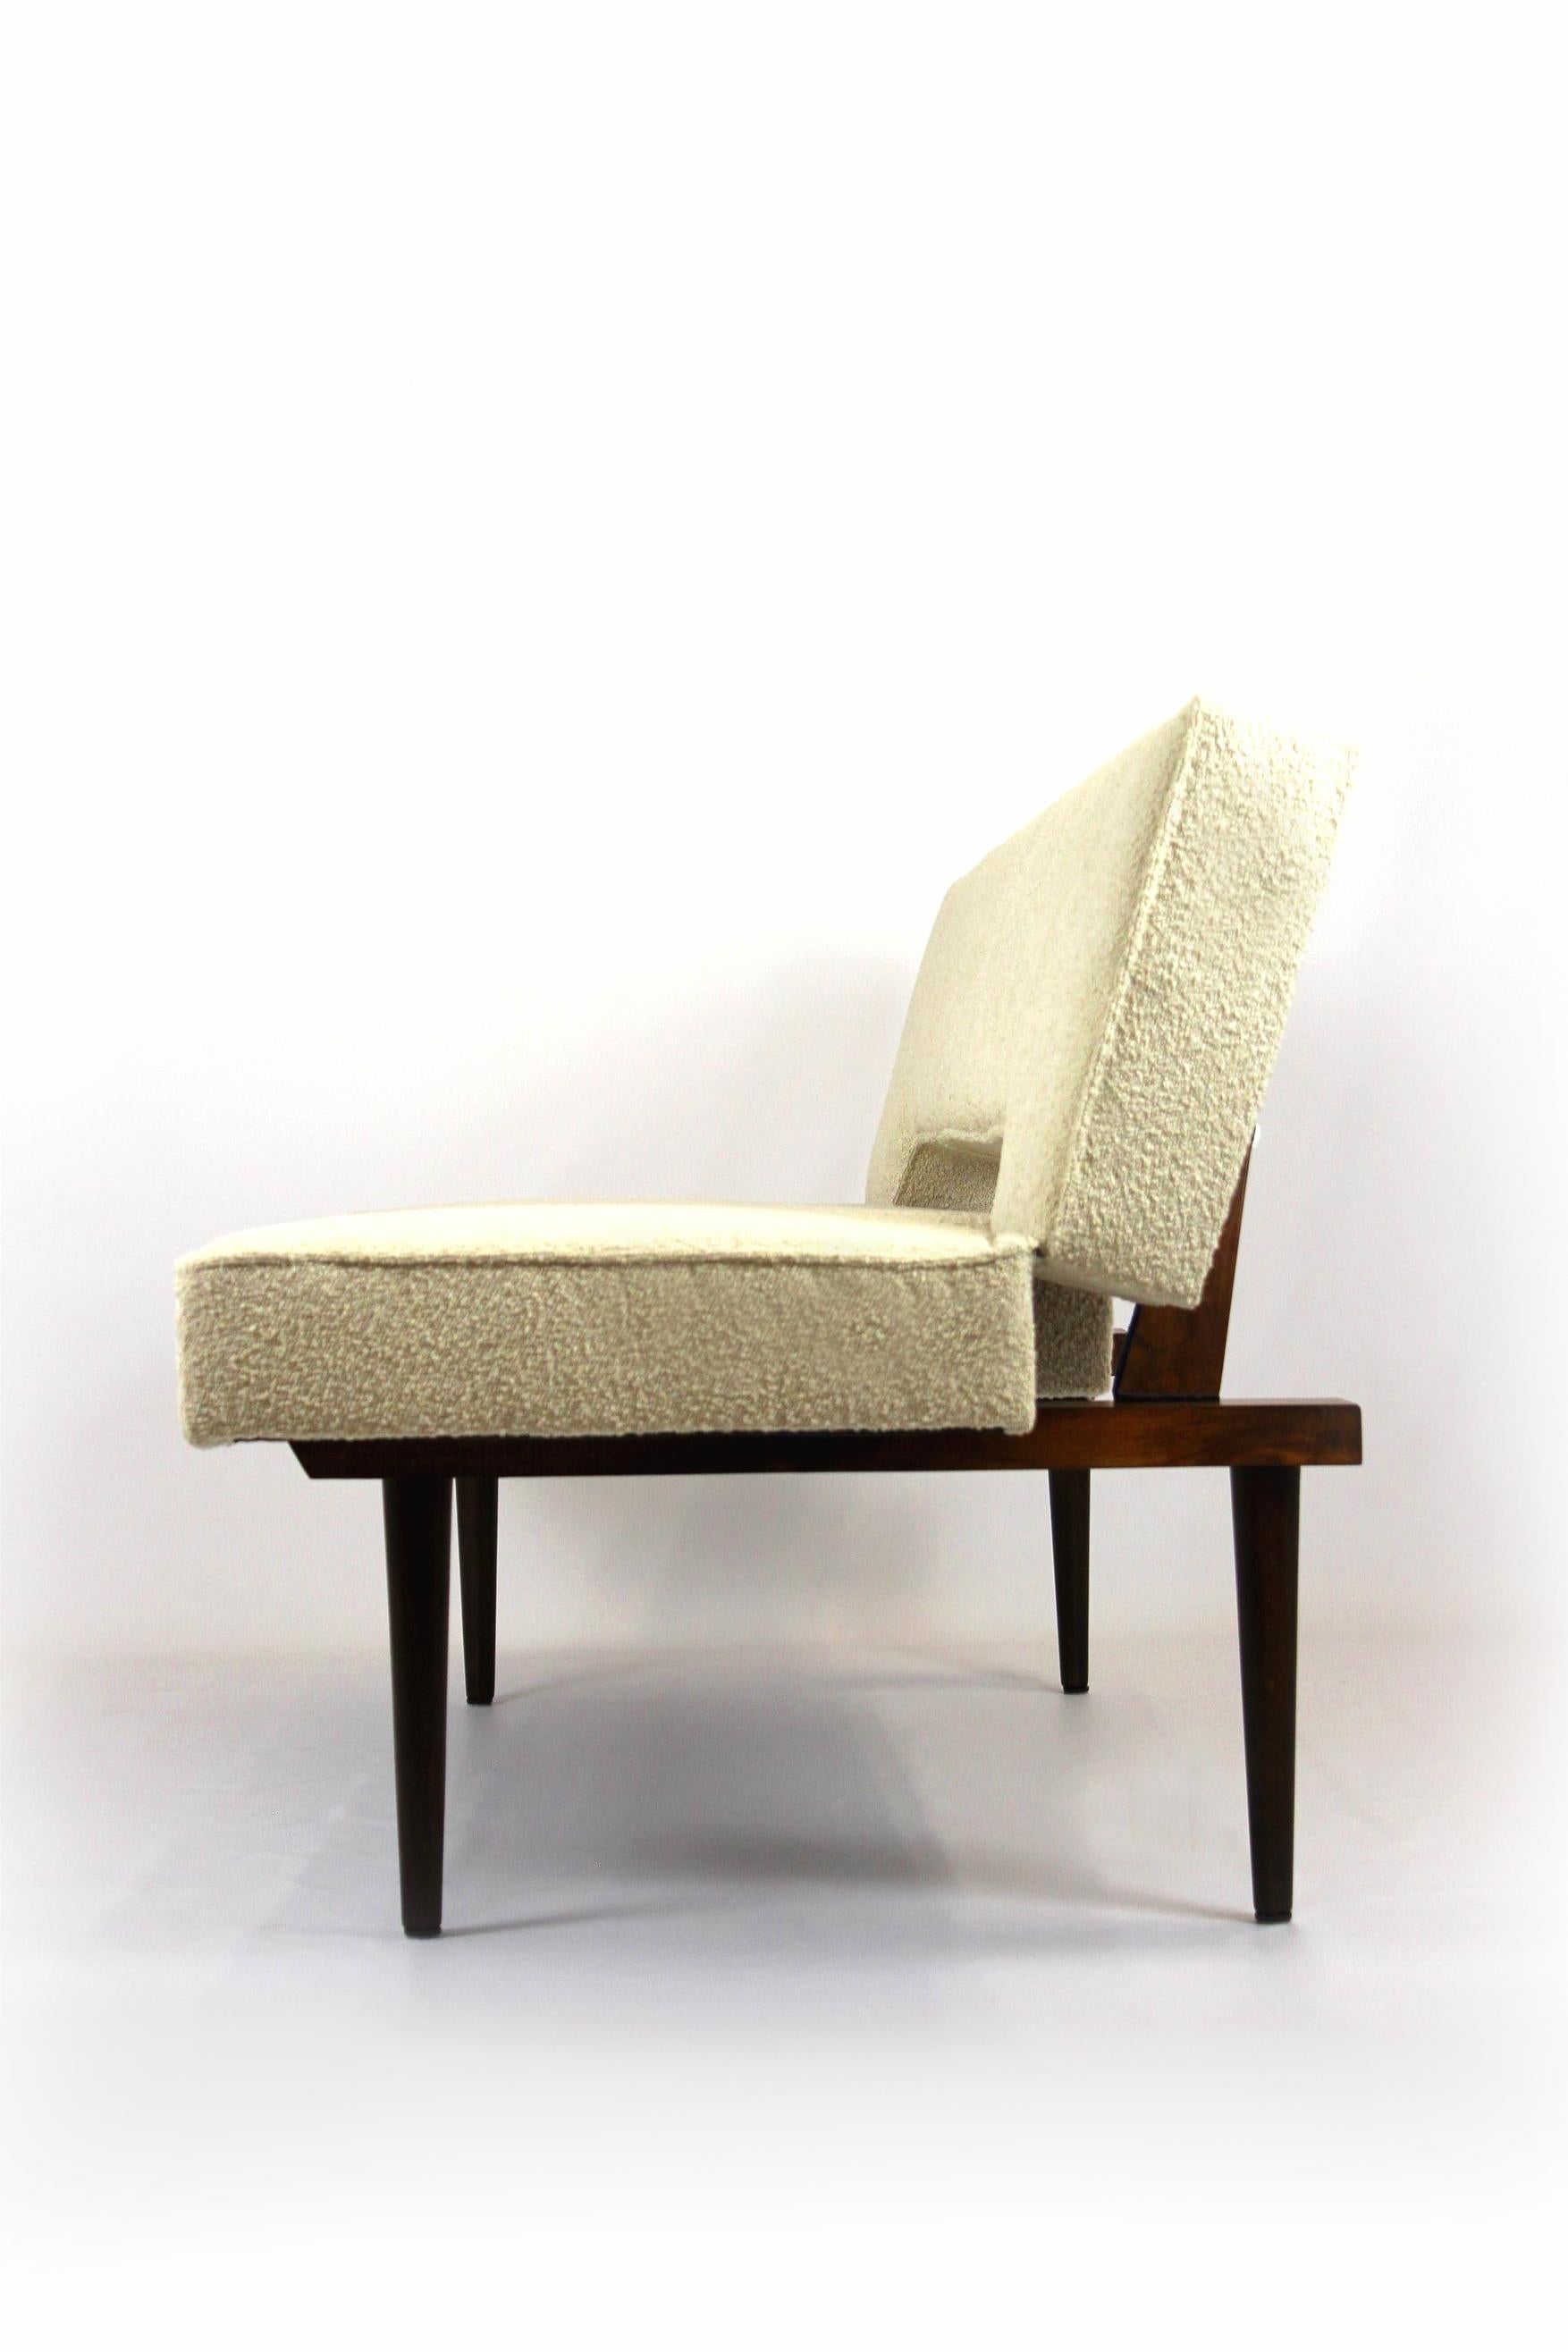 20th Century Restored Mid-Century Sofa in Bouclé Upholstery by Miroslav Navratil, 1960s